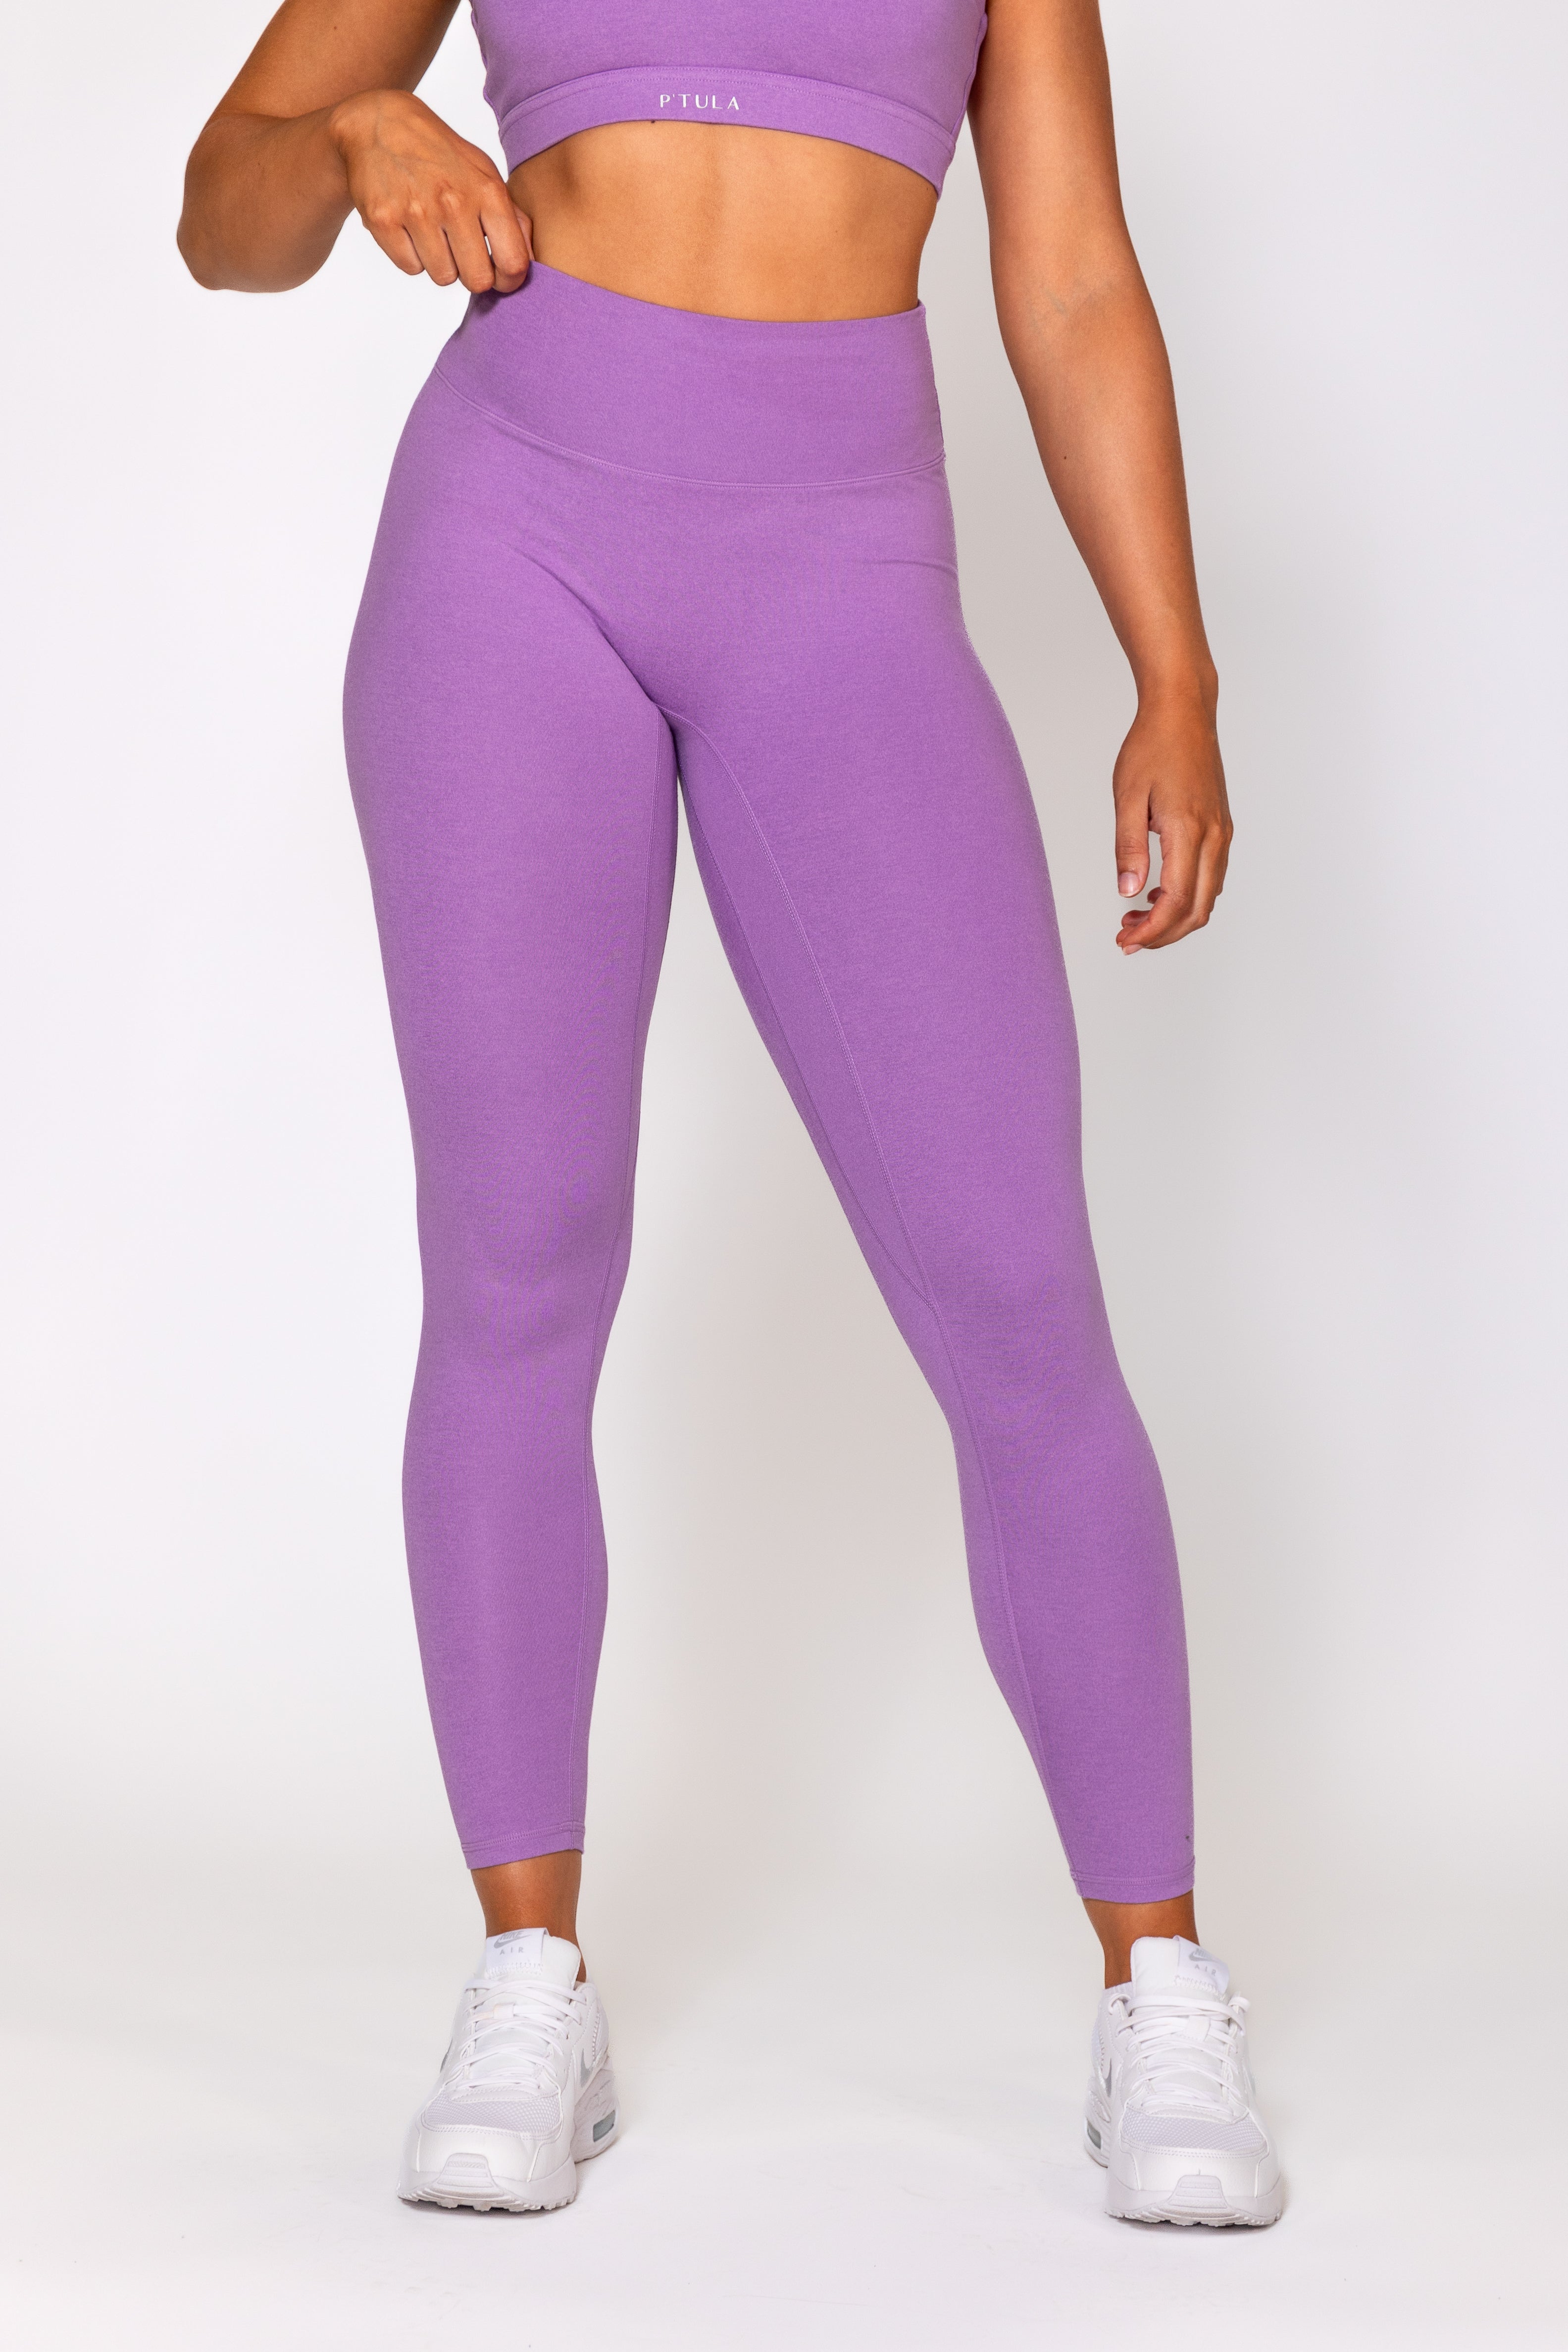 Prilagopj Women'S Yoga Pants - High Waist Pink Pastel Gym Leggings